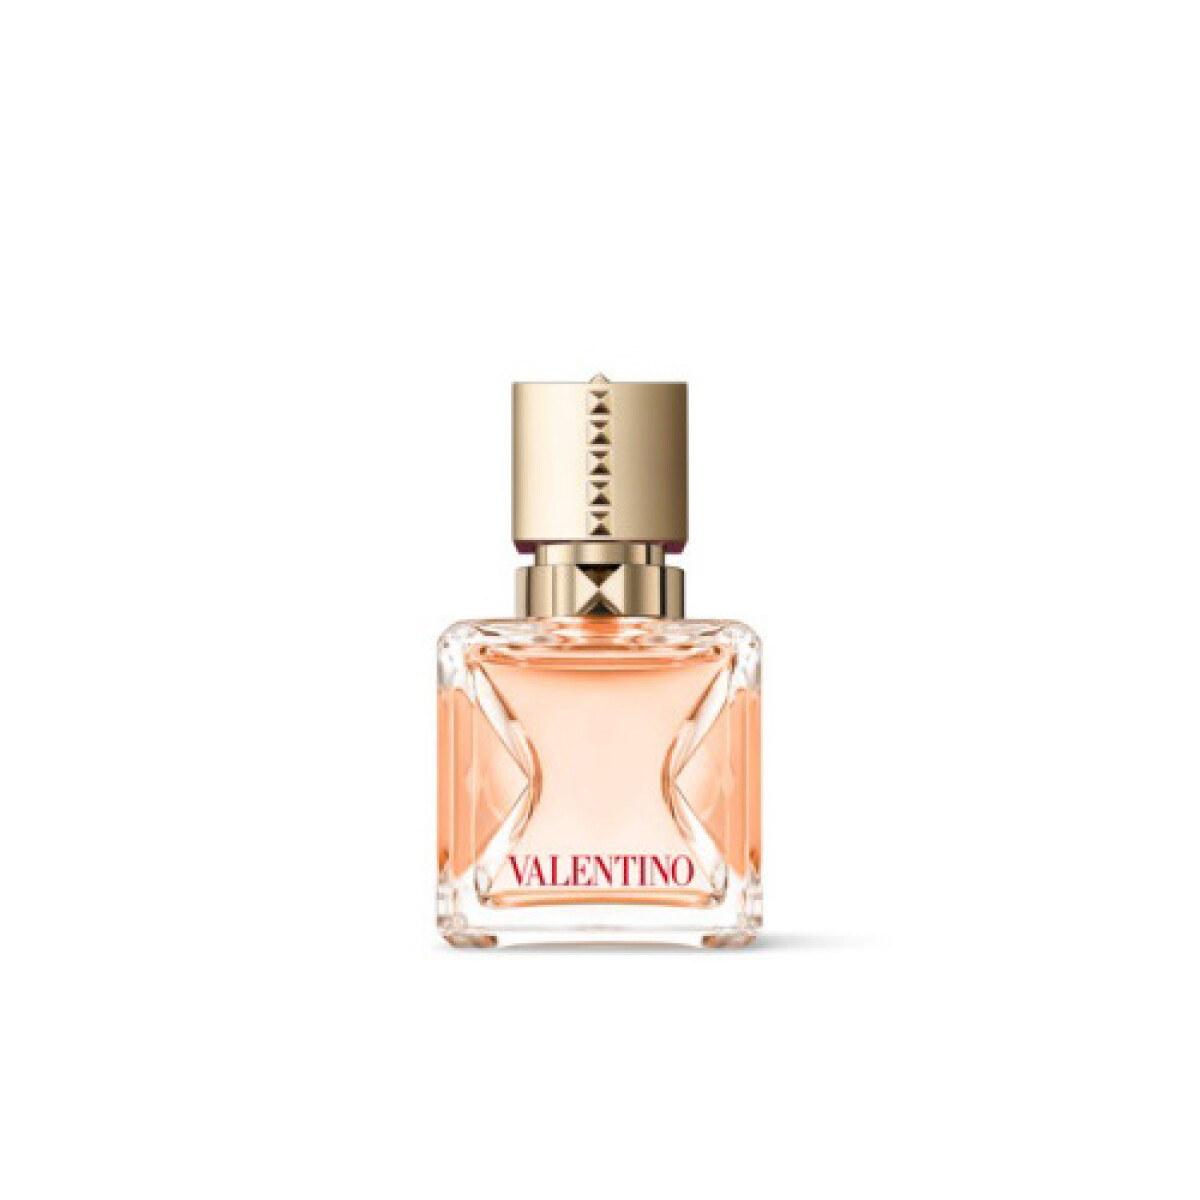 Perfume Valentino Voce Viva Intense EdiciÃ³n Limitada V30ml 